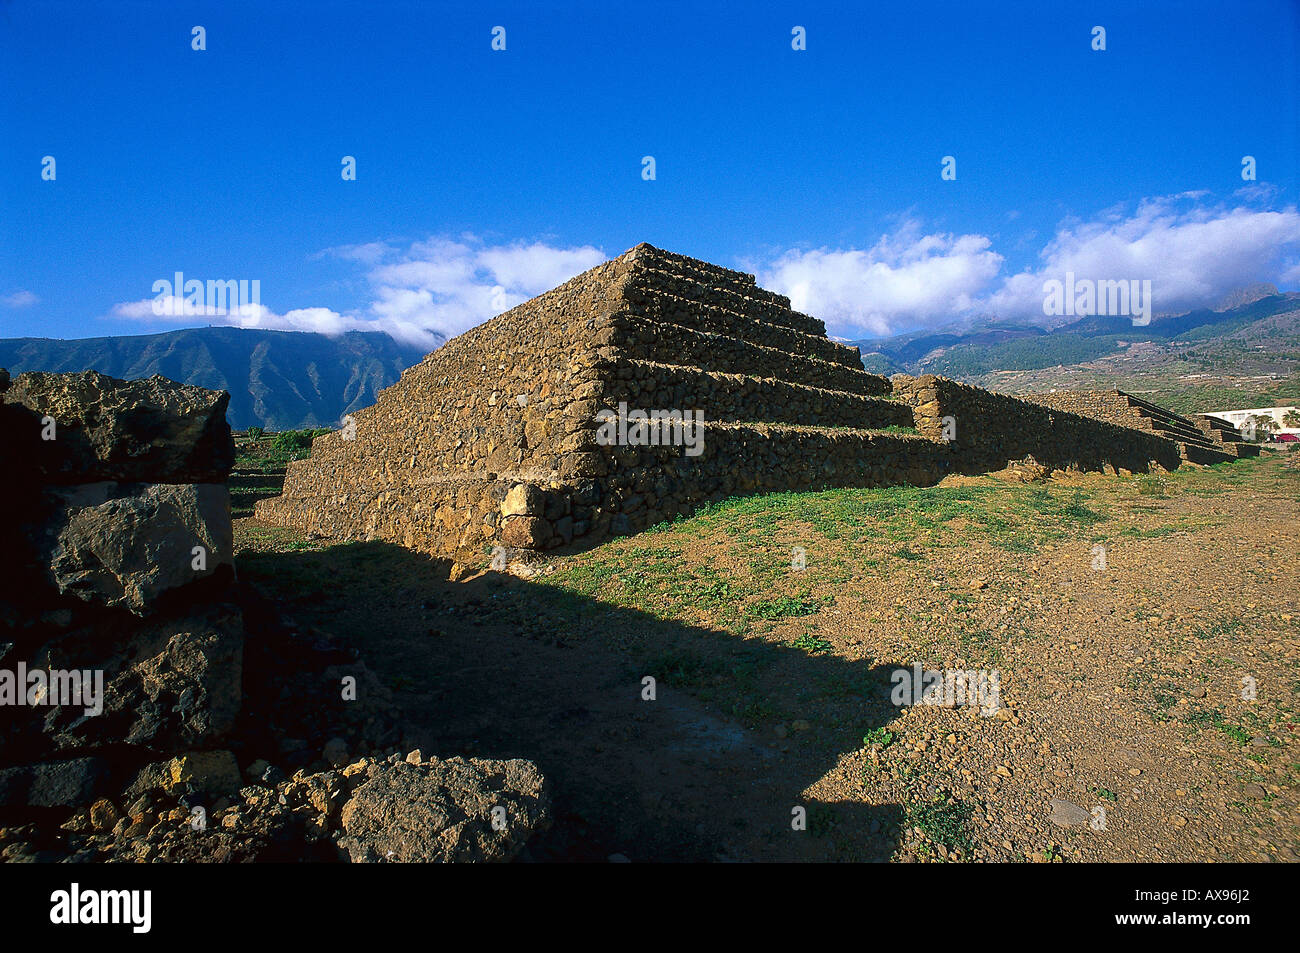 Ethnologic Park founded by Thor Heyerdal, Pyramids of Guimar, Gueímar, Tenerife, Canary Islands, Spain Stock Photo